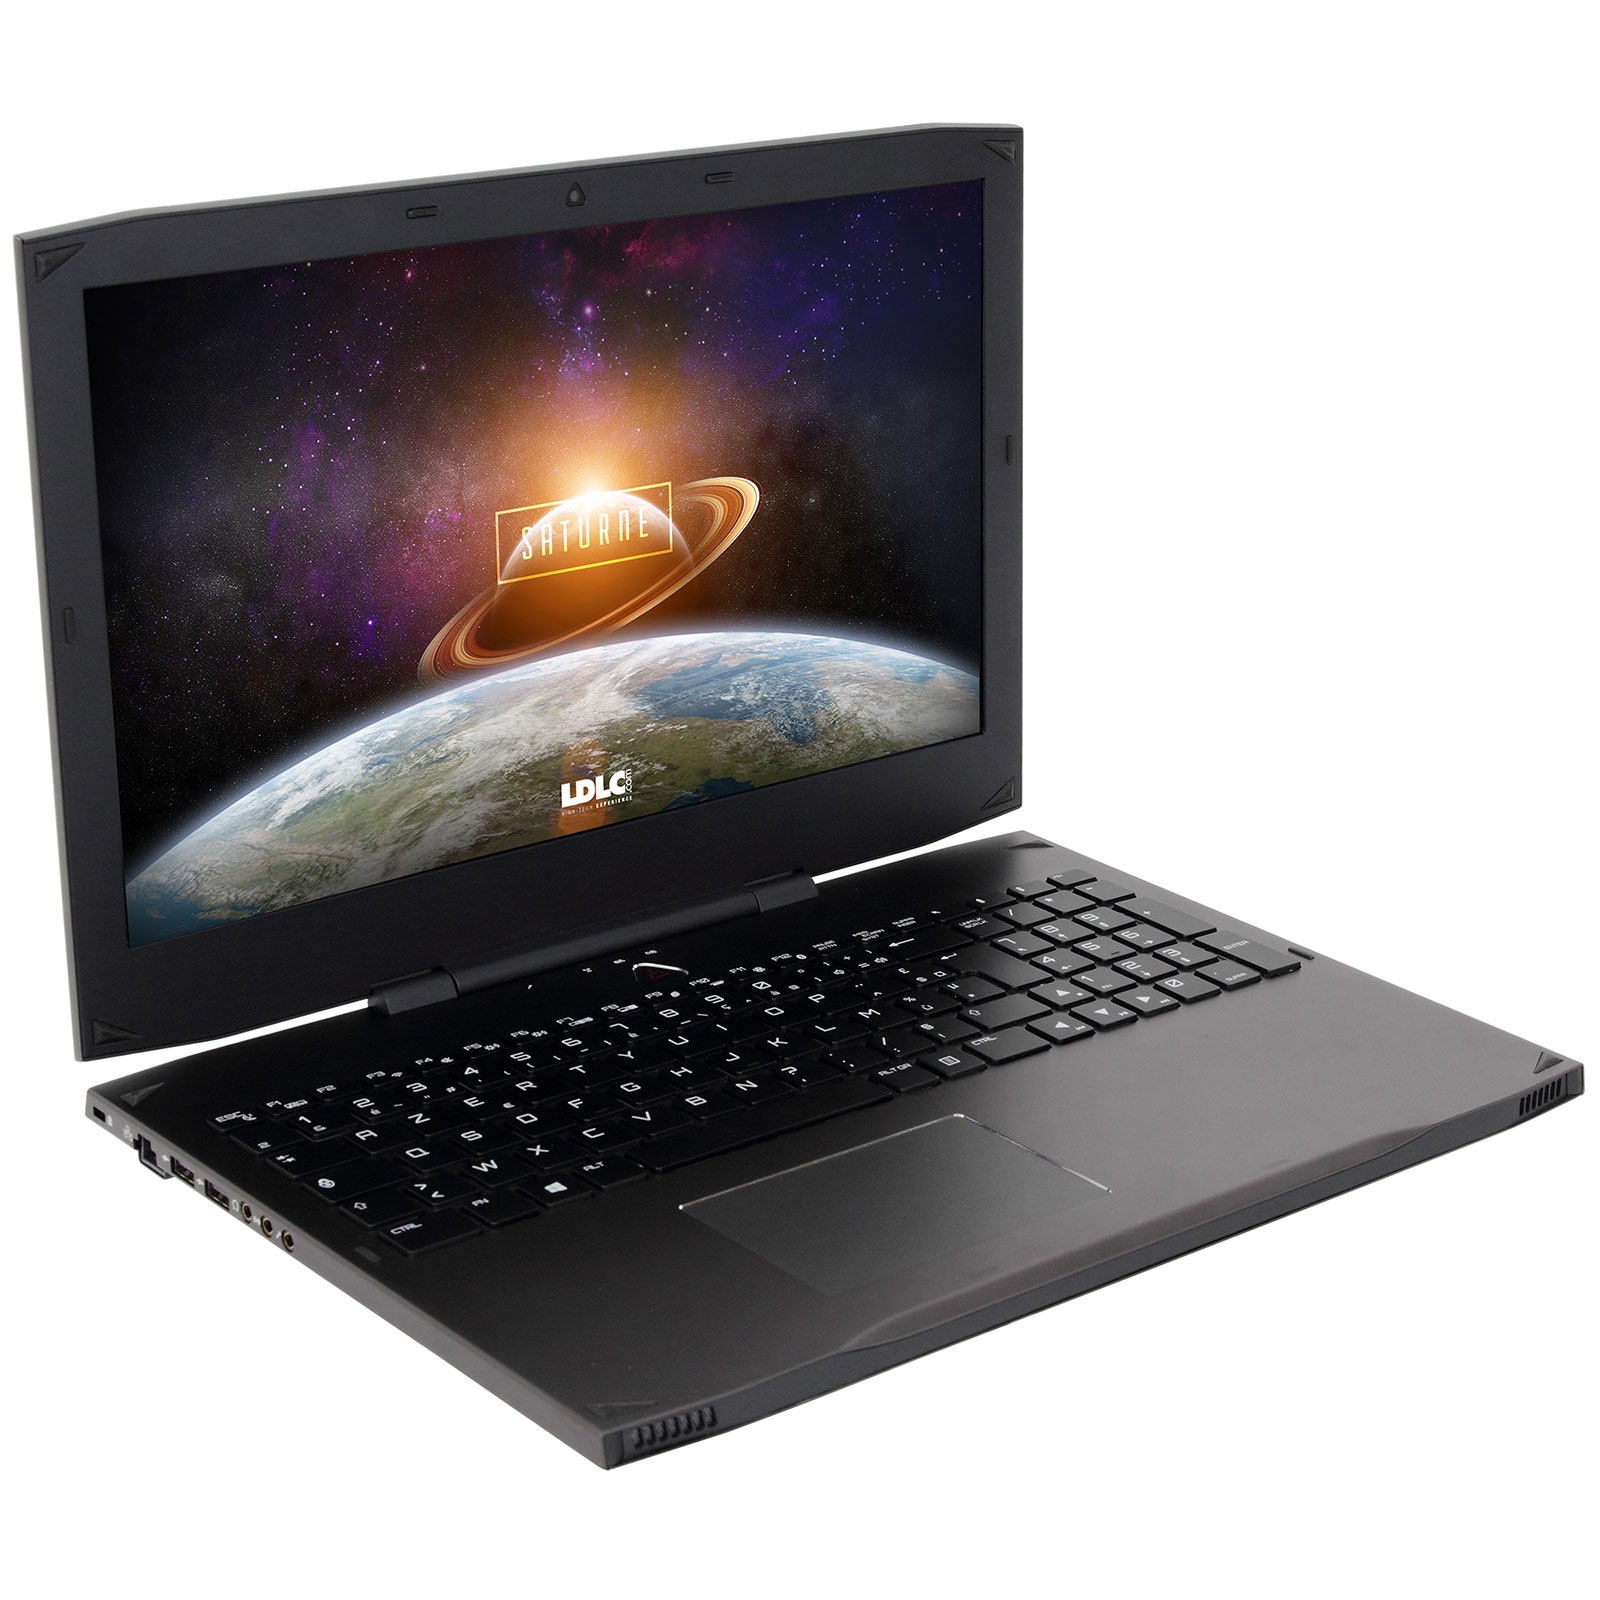 Ноутбук LDLC Saturne SK96-I5, 15.6 (1920x1080), Intel Core i5-6300HQ (2.3GHz), 8GB, 128GB, NVIDIA GeForce GTX 